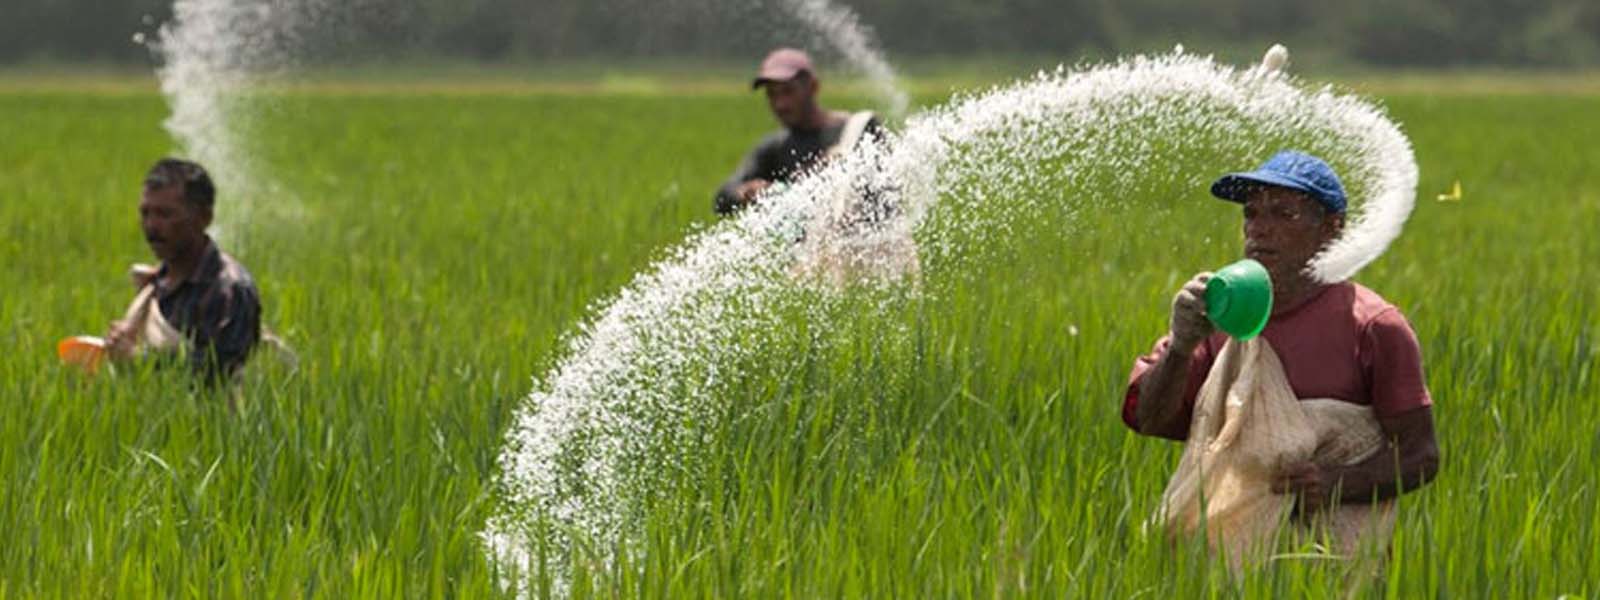  Indian PM agreed to deliver fertilizer